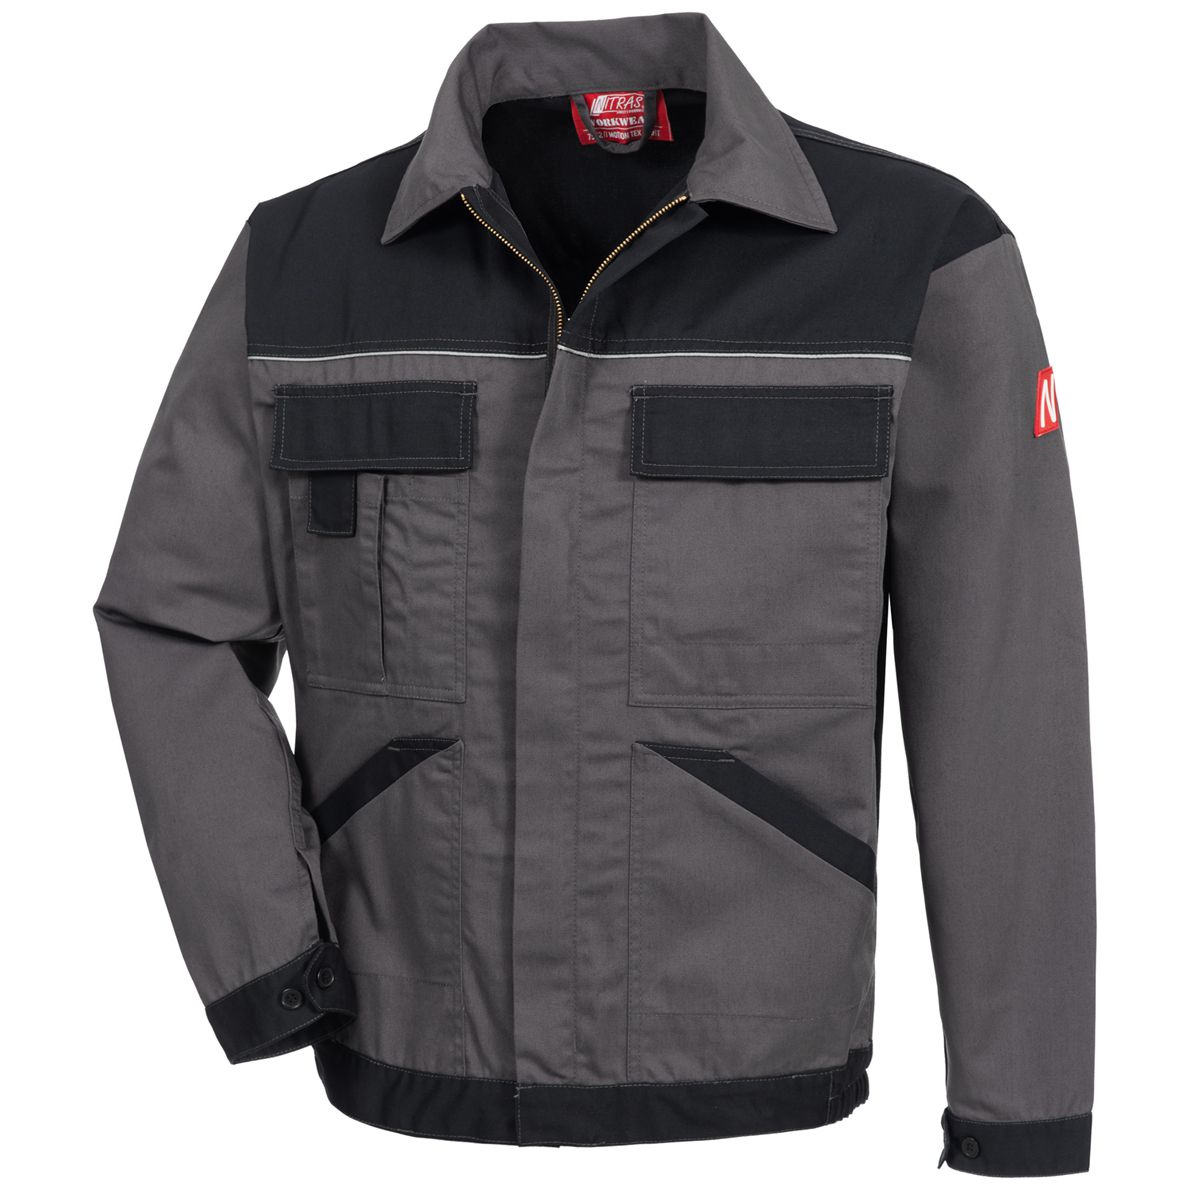 NITRAS MOTION TEX LIGHT work jacket - cargo jacket with many pockets - light & breathable